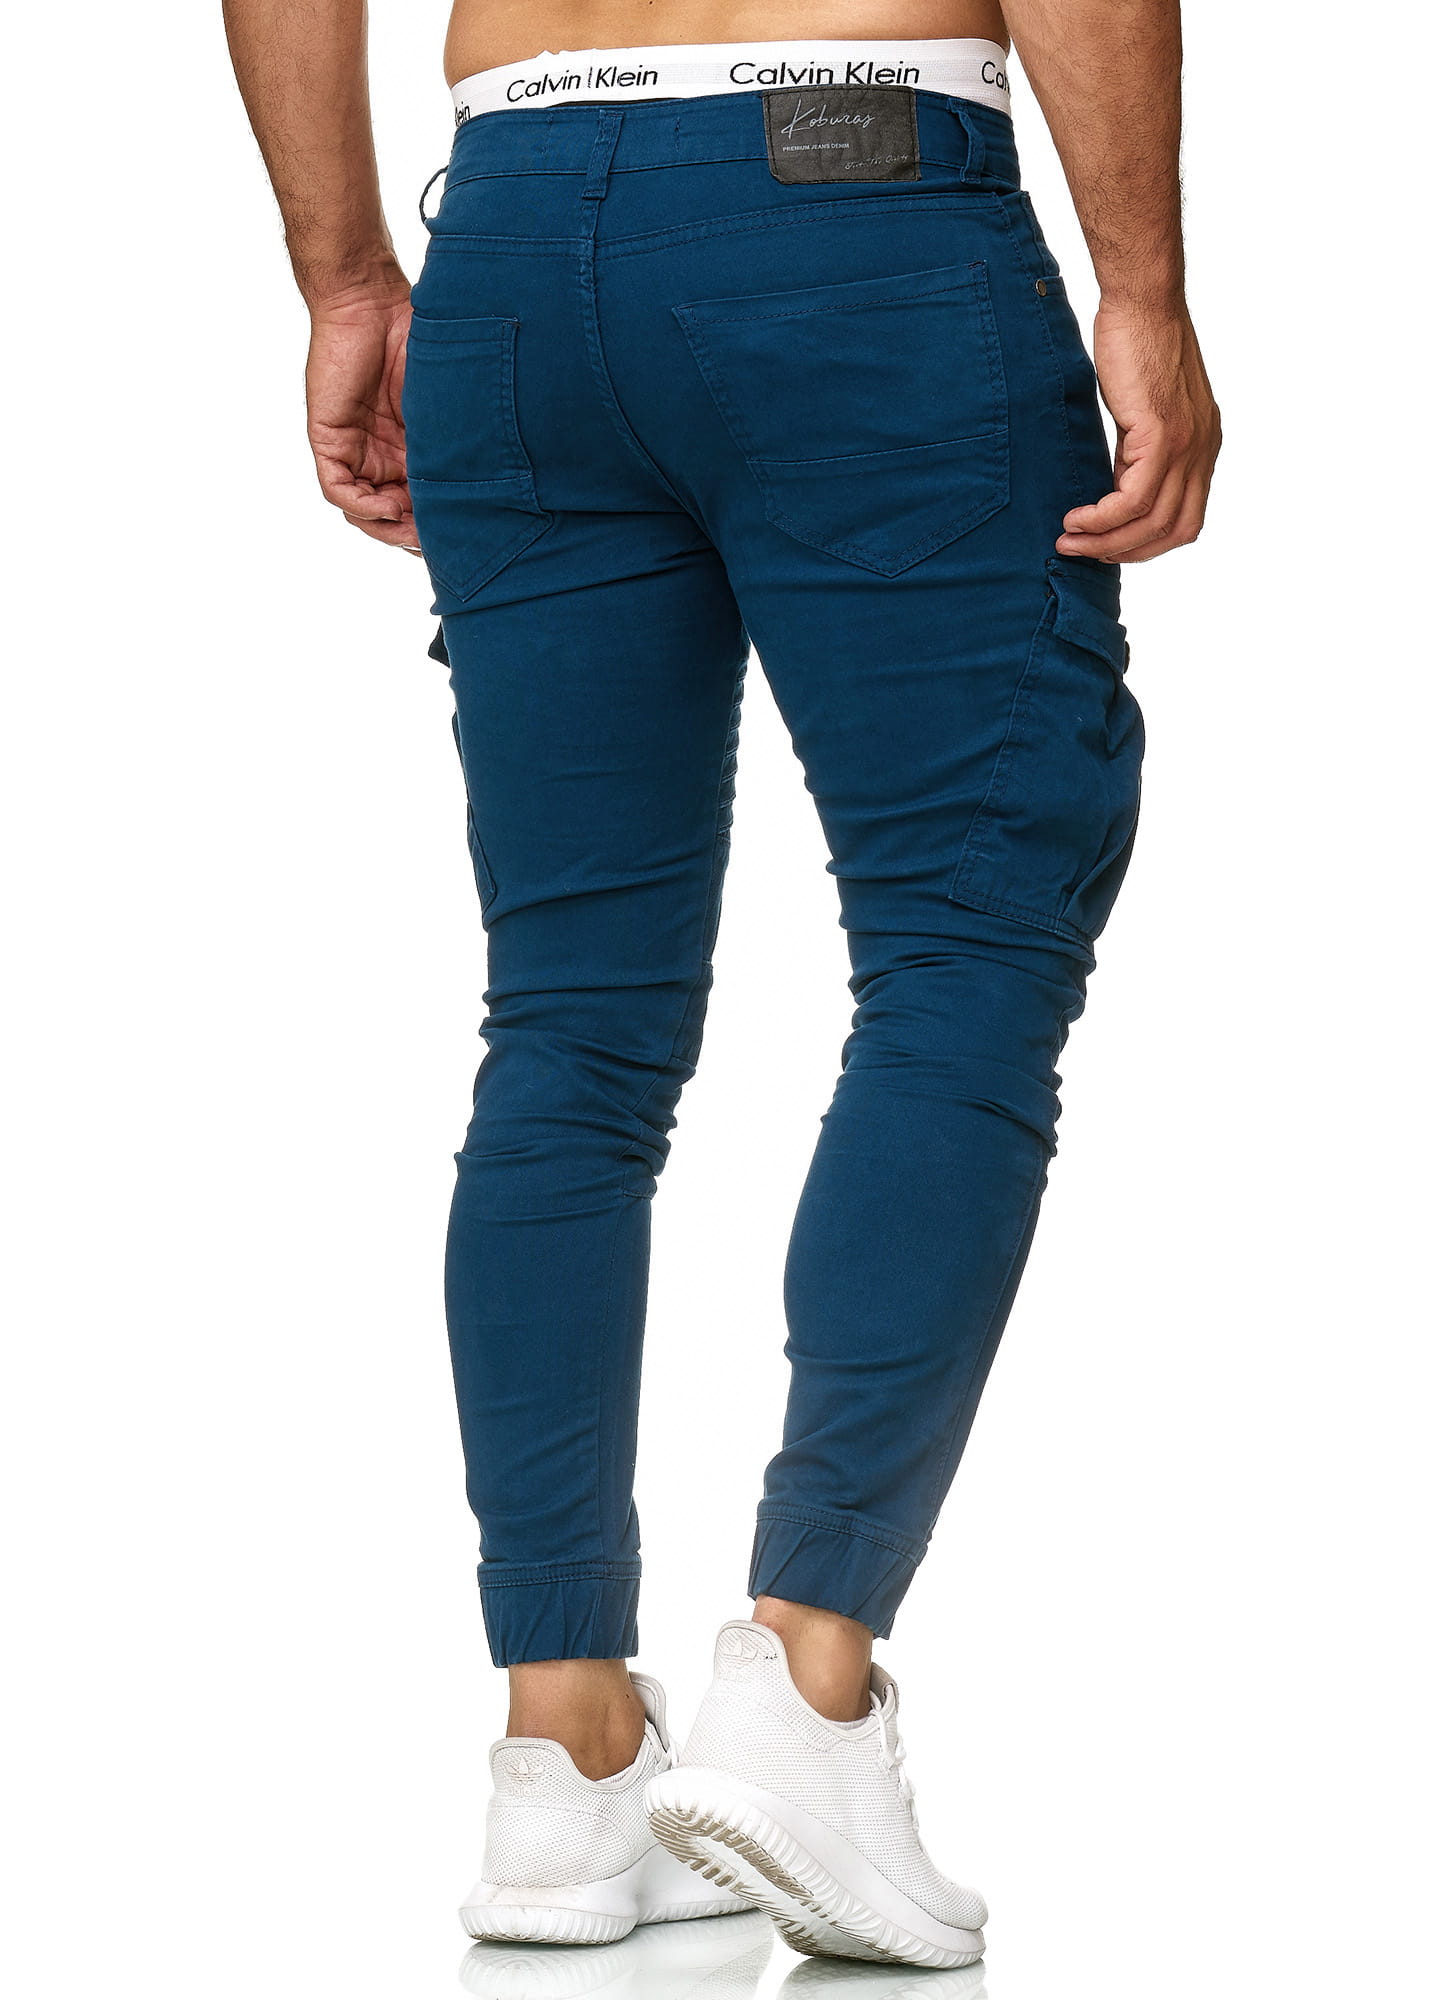 Notebook volwassen metro Heren Chino Pants Jeans Designer Chino Pants Slim Fit Men Skinny 1042 |  Chinos | Spijkerbroeken & Chinos | Mannen | OneRedox - Stijlfabriek